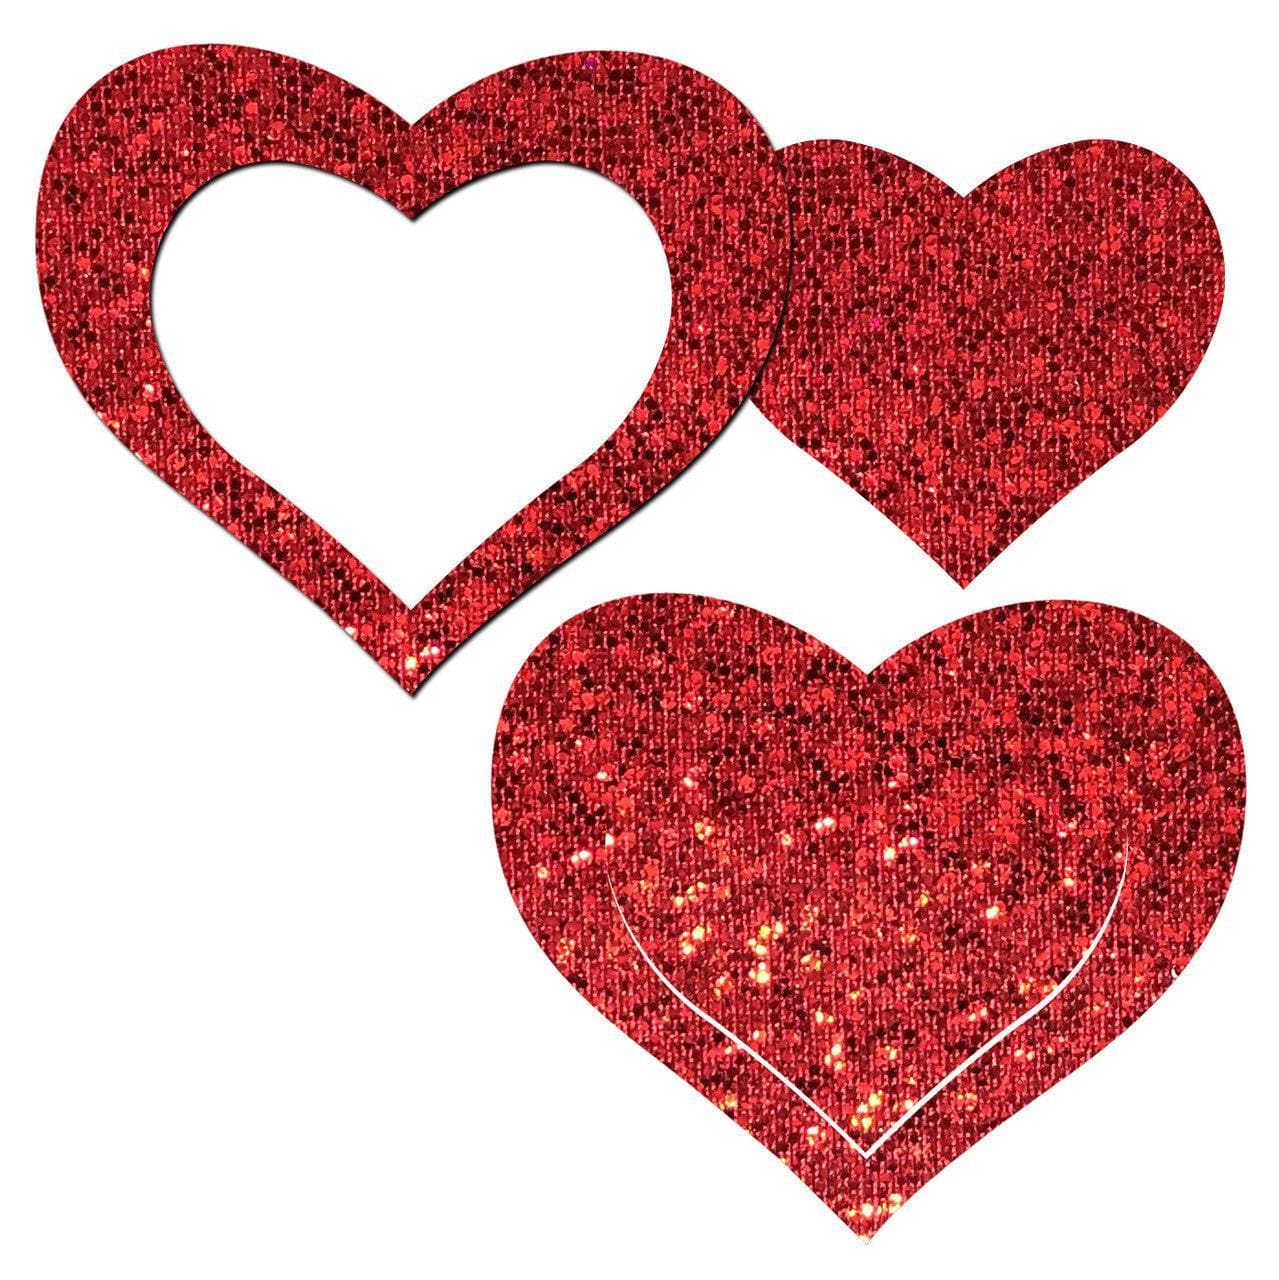 Pastease Peek-a-Boob: Red Glitter Heart Frame & Center Nipple Pasties - Romantic Blessings